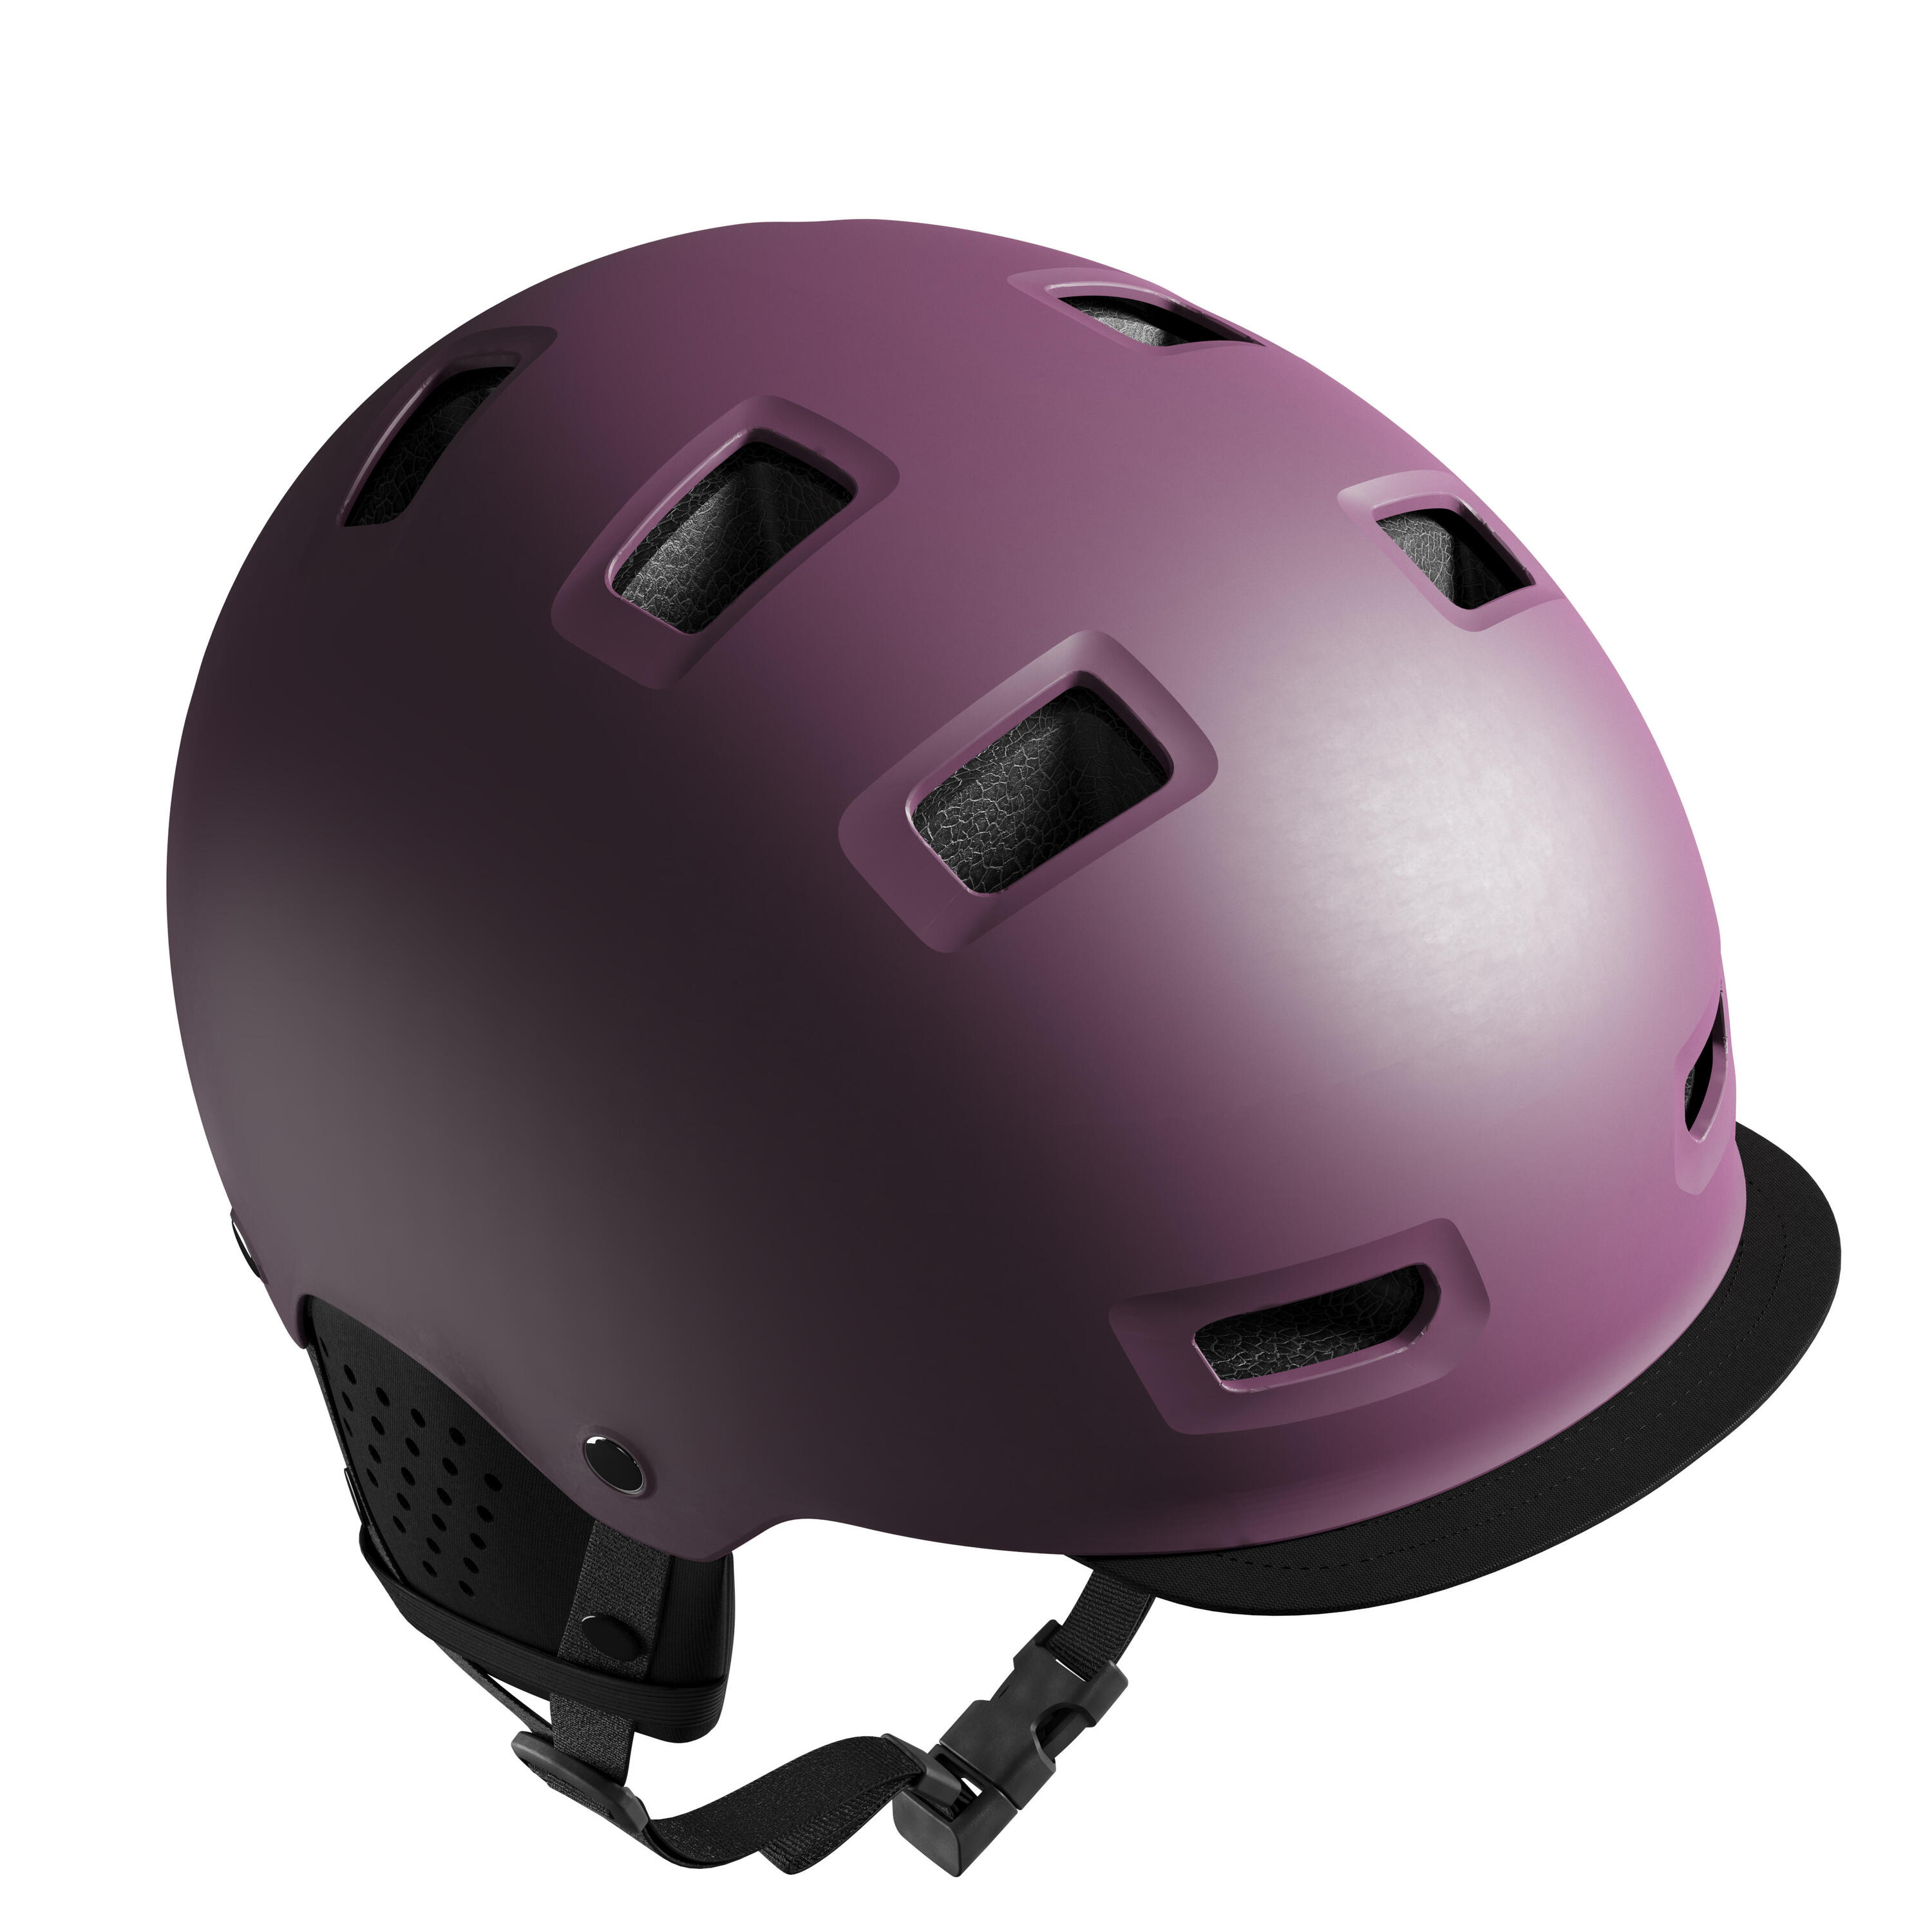 BTWIN 500 City Cycling Bowl Helmet - Plum